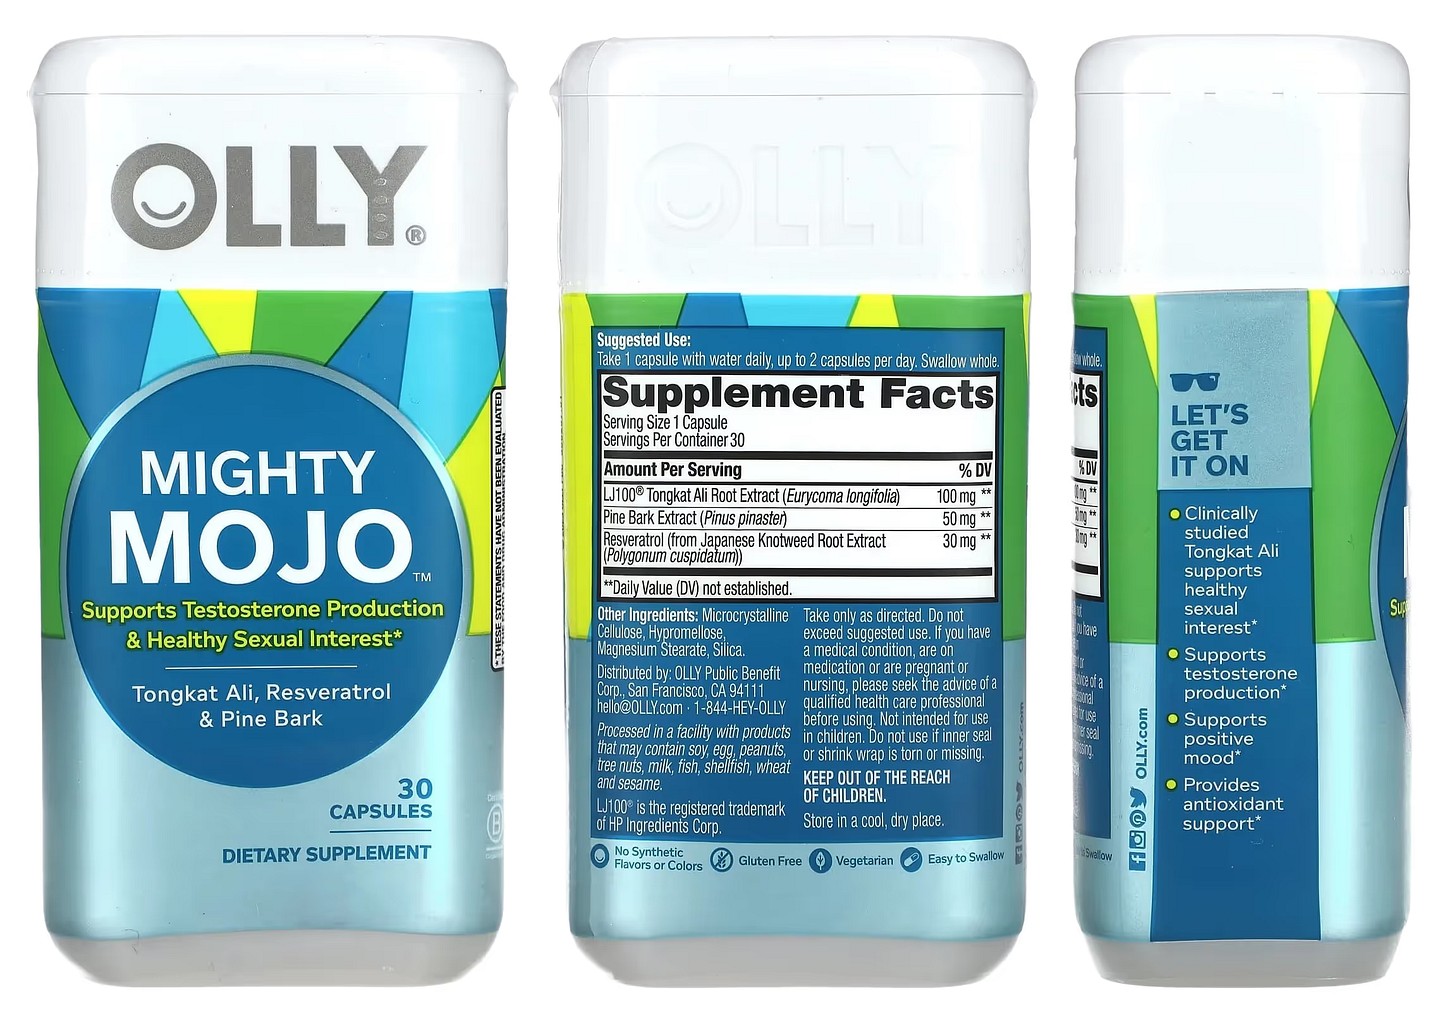 OLLY, Mighty Mojo packaging